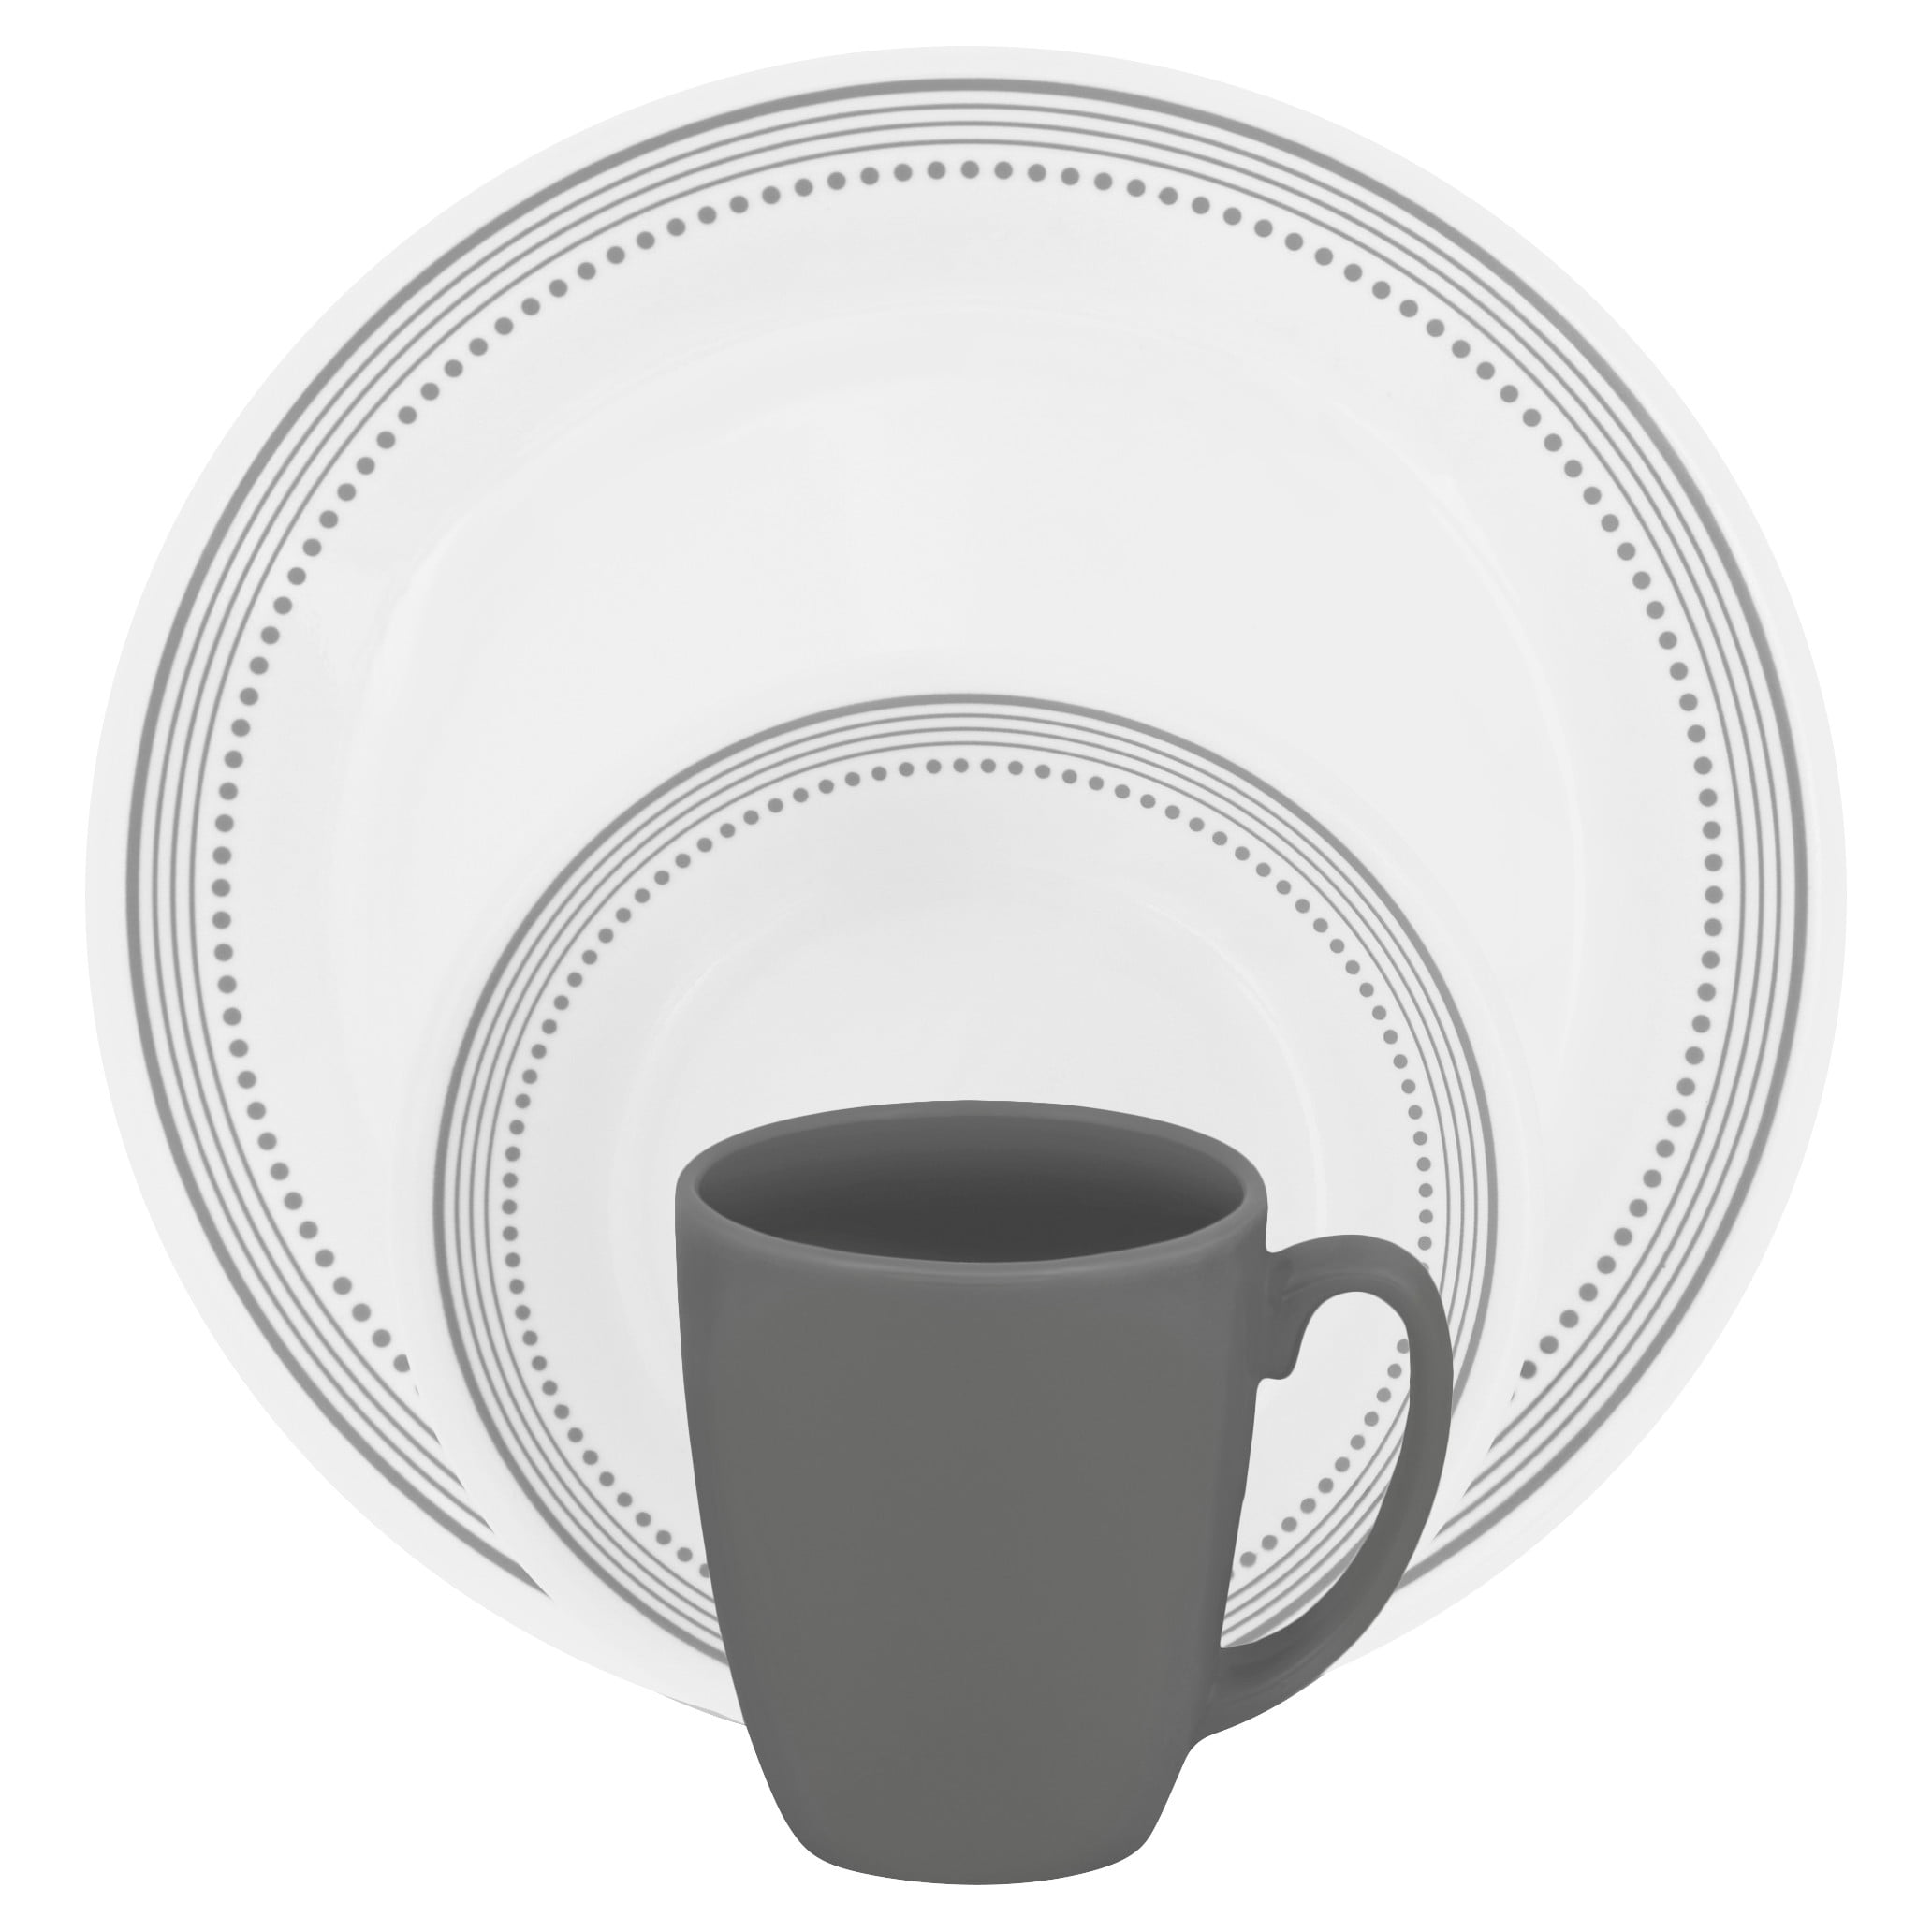 Details about   18-Piece Elegant Kitchen Dinnerware Set Include 6PCS Bowls and 12PCS Dishes 